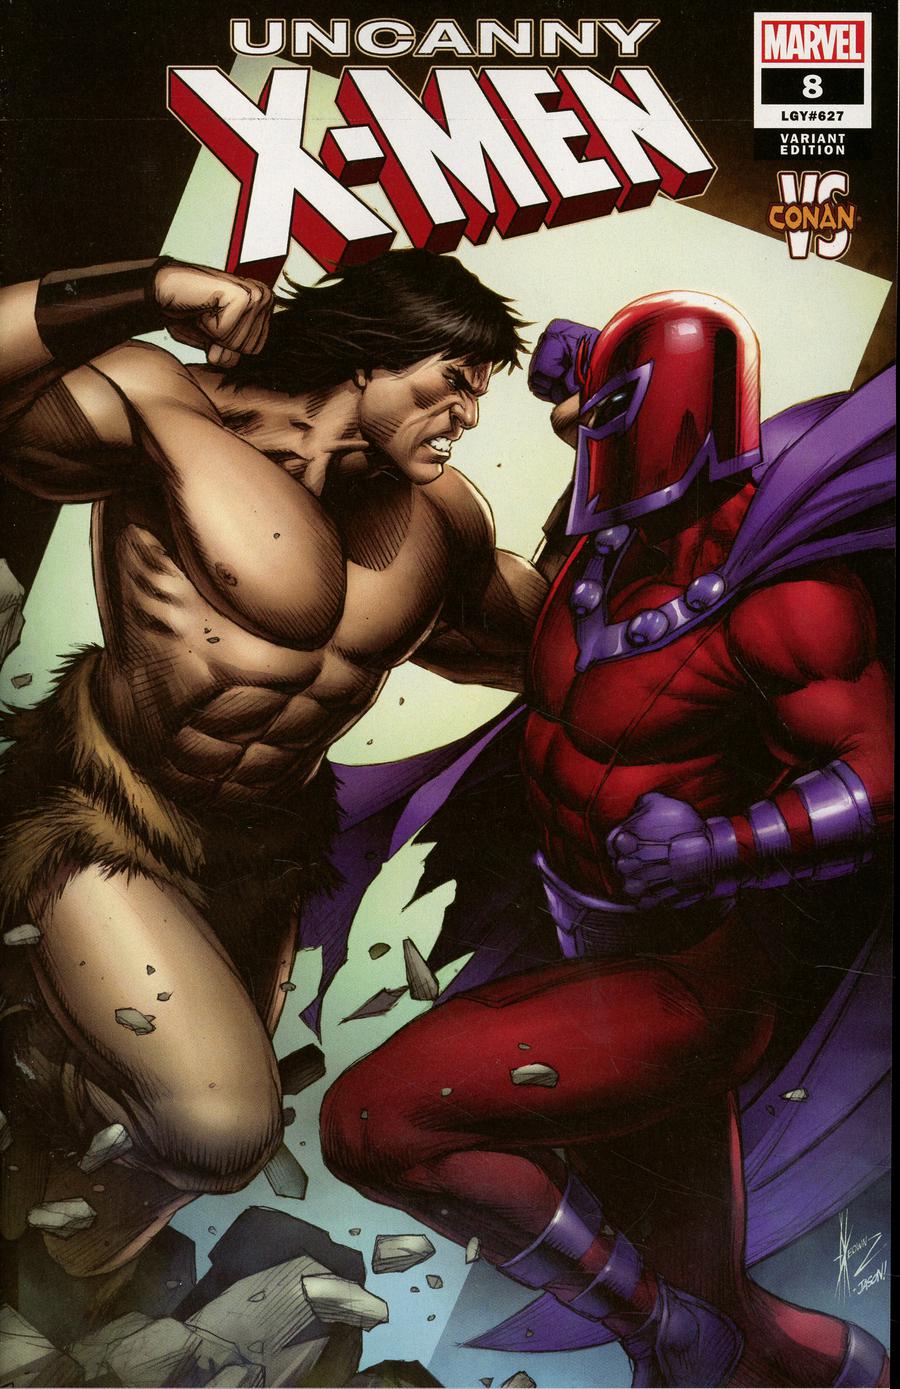 Uncanny X-Men Vol 5 #8 Cover D Variant Dale Keown Conan vs Marvel Villains Cover